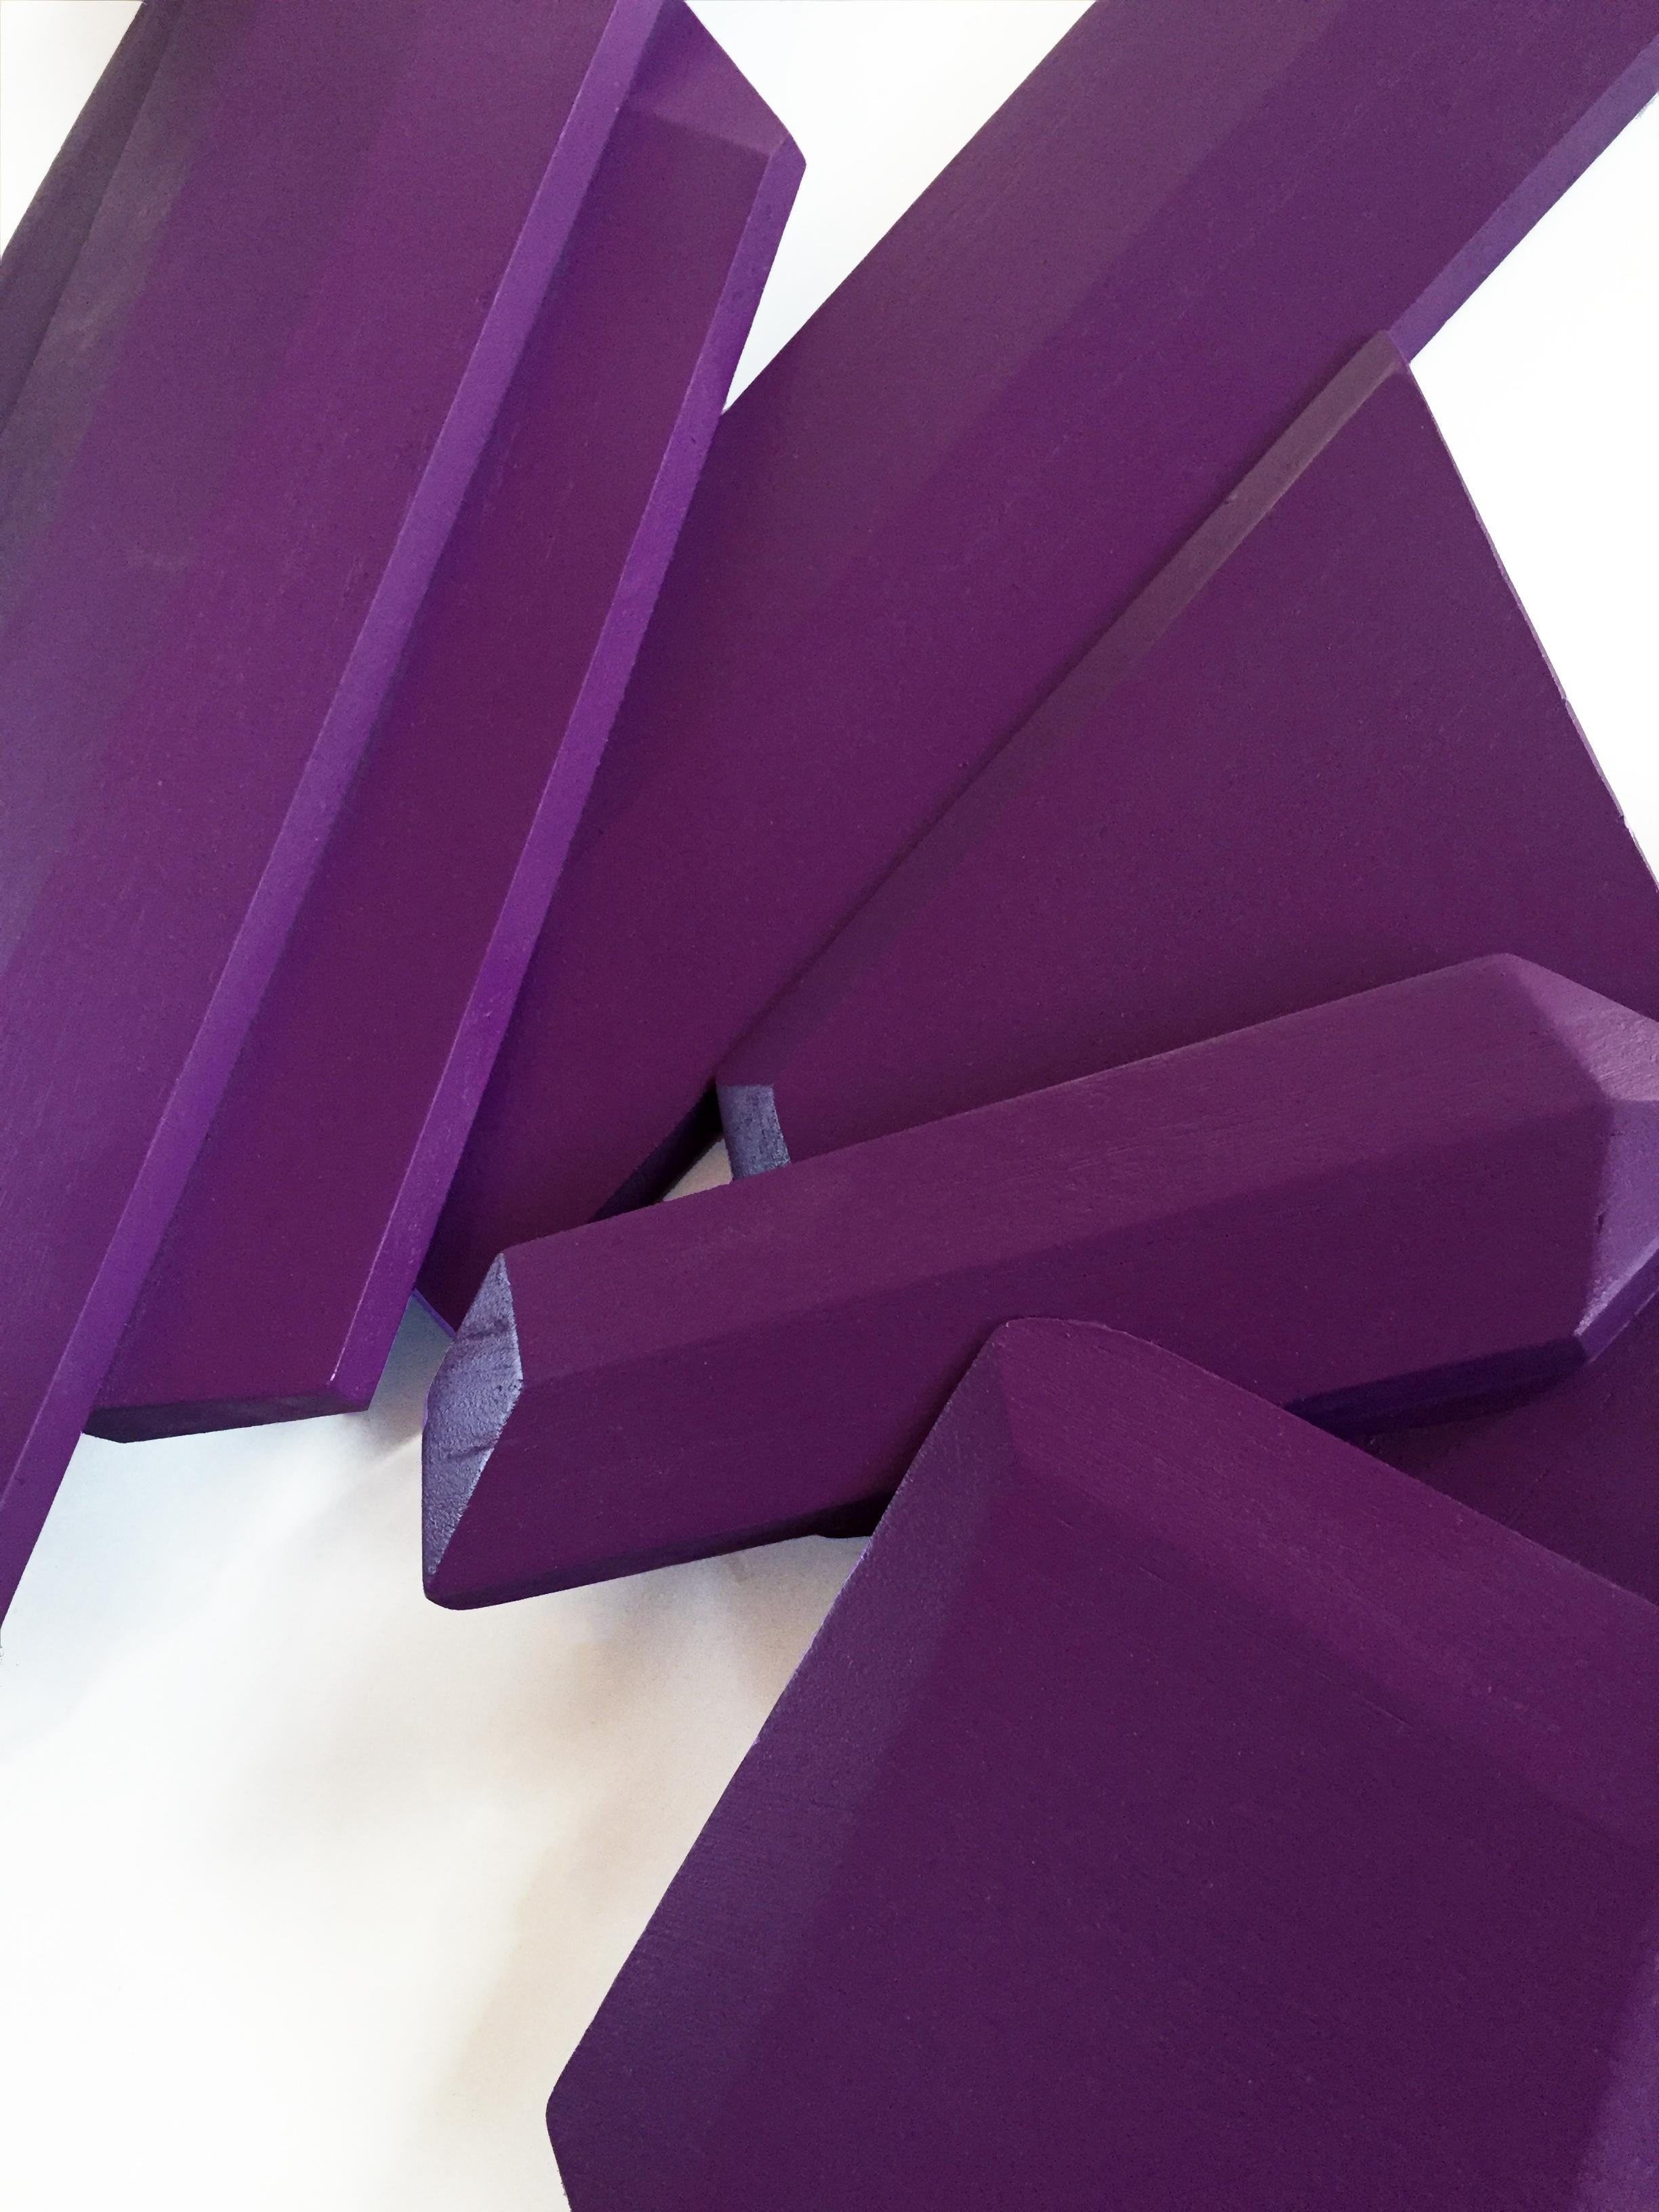 Ultra Violet Crystal (wood, contemporary design, geometric, purple, sculpture) - Sculpture by Chloe Hedden